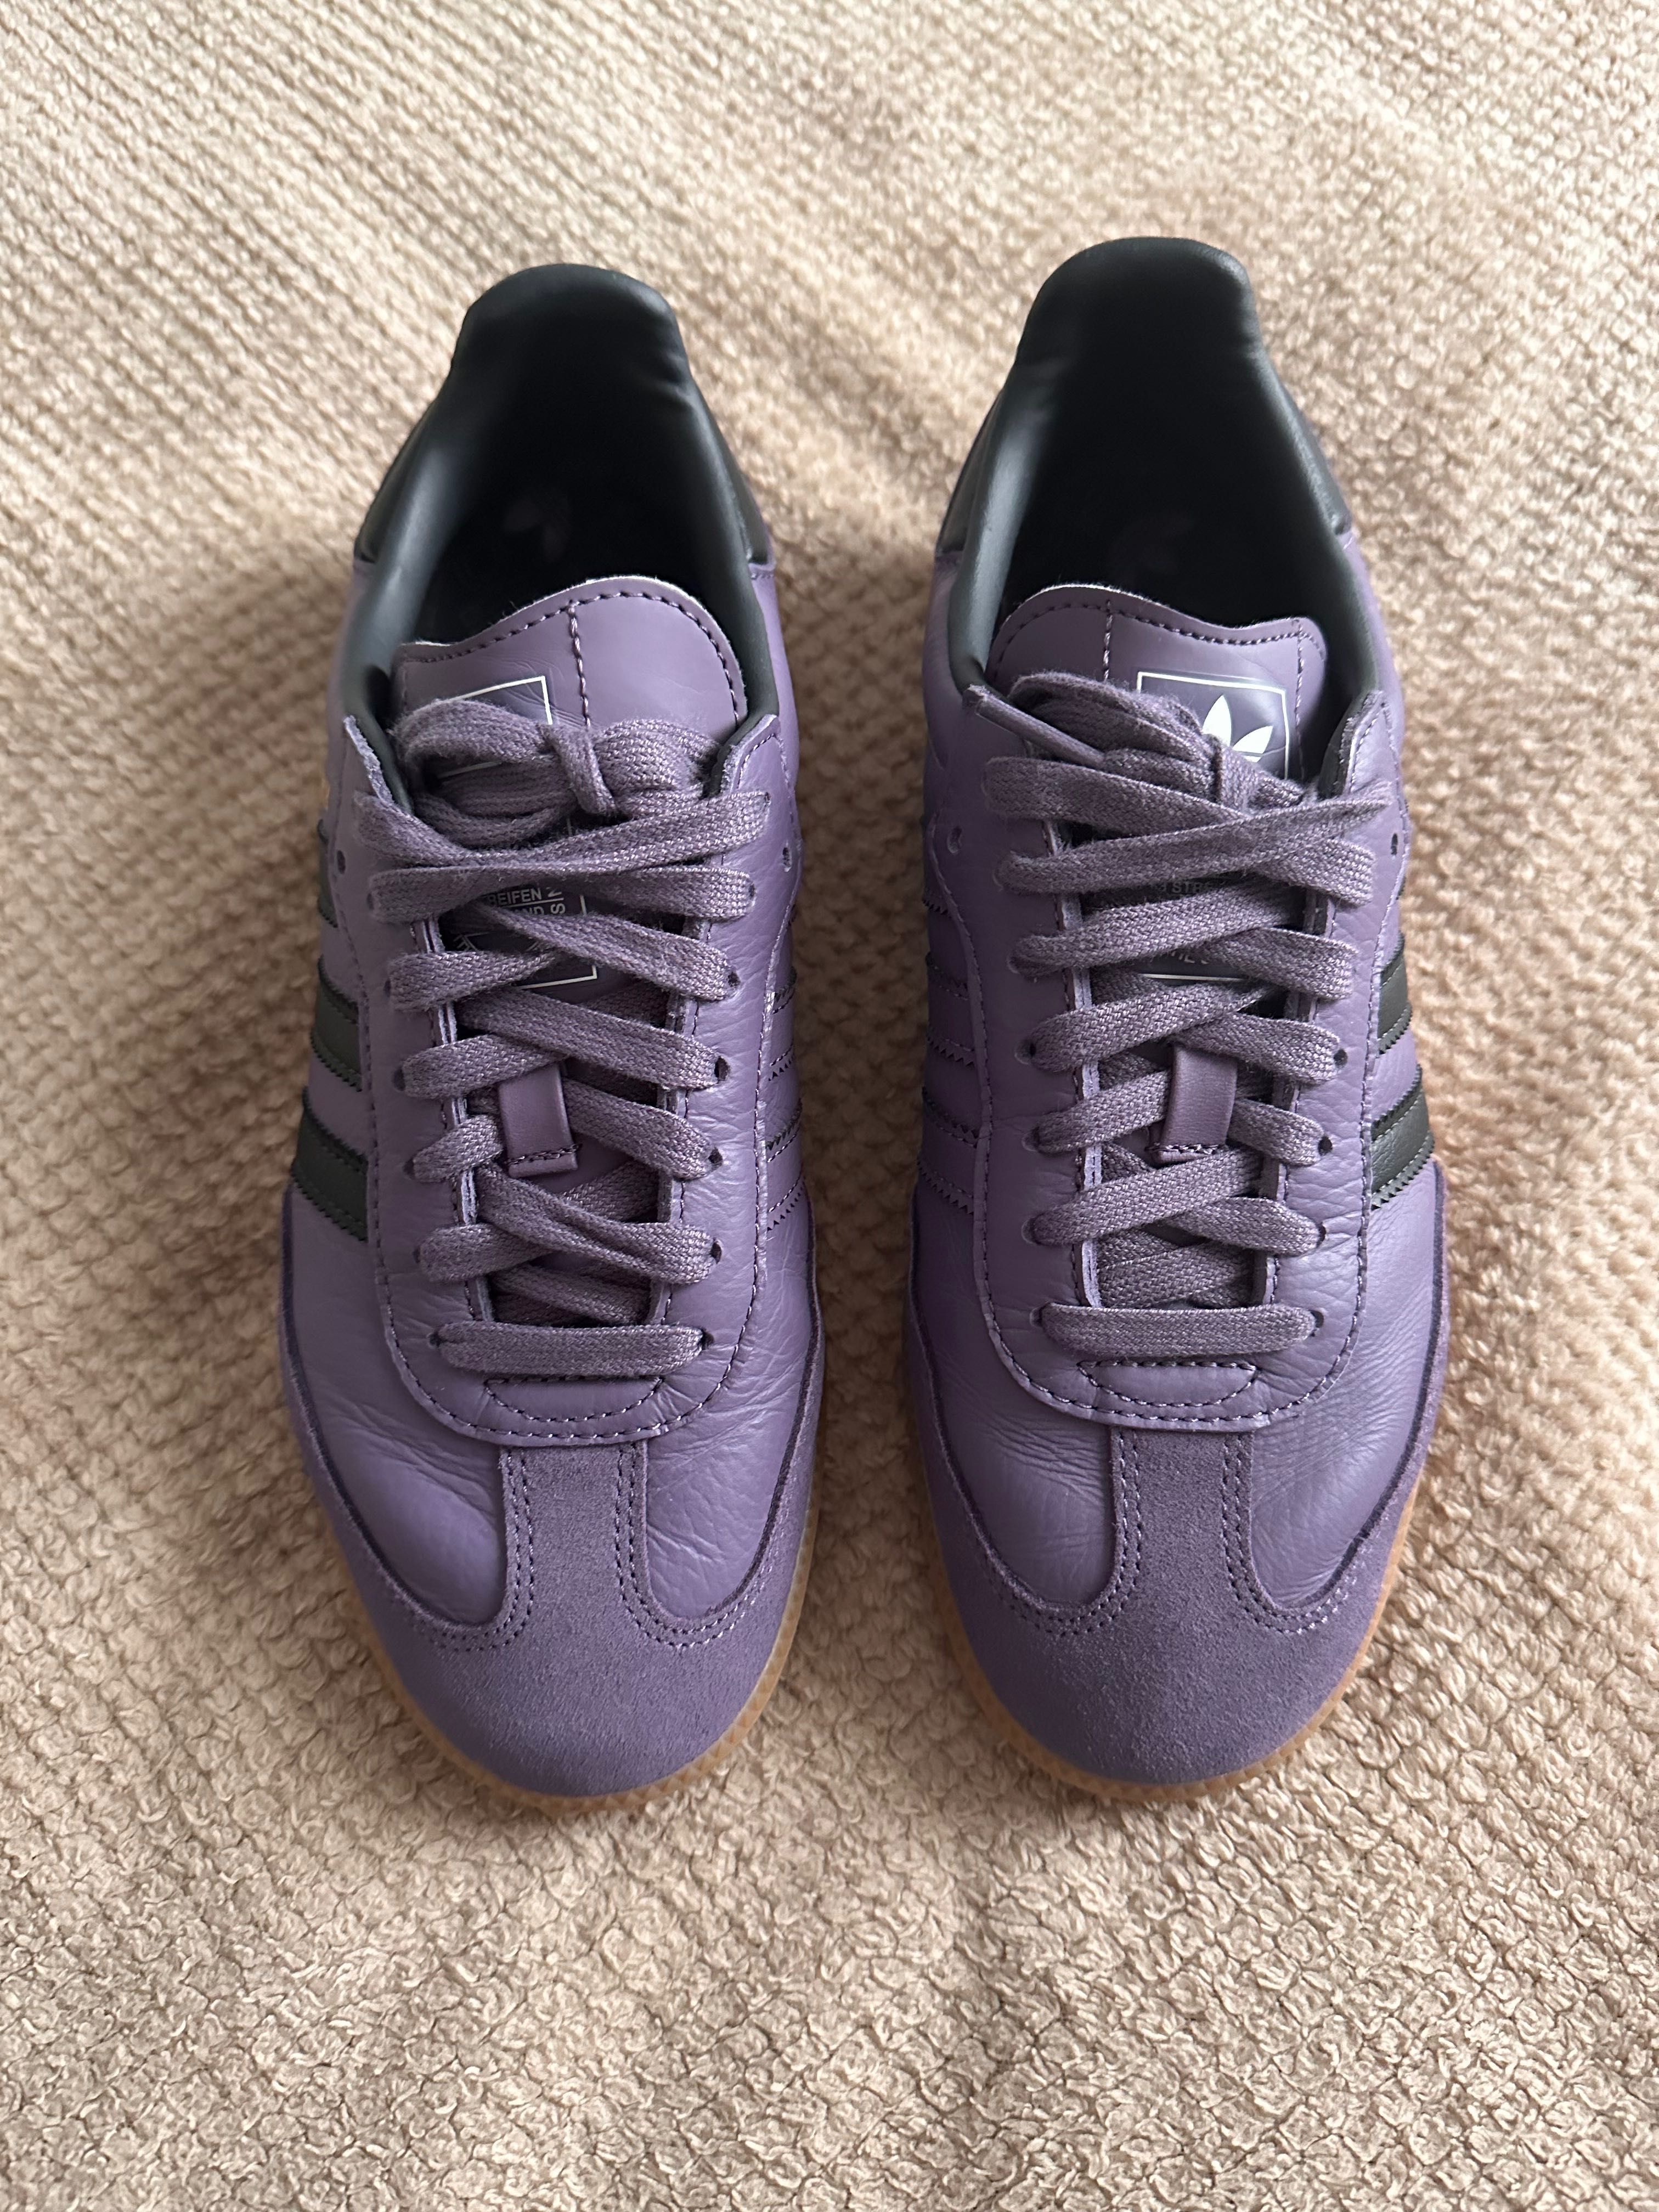 Adidas samba purple 38